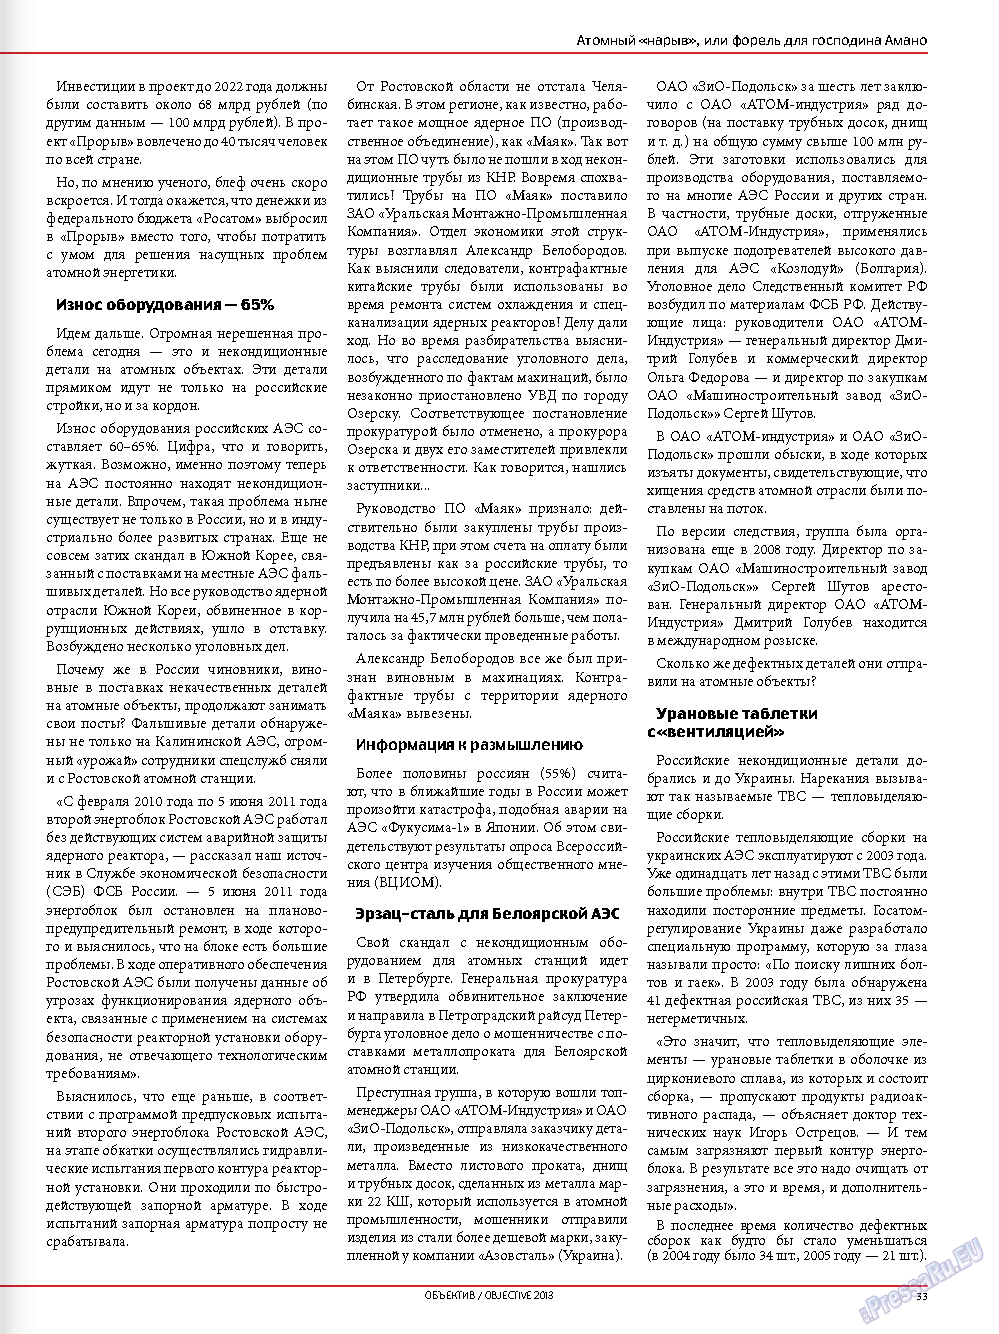 Объектив EU (журнал). 2013 год, номер 1, стр. 33